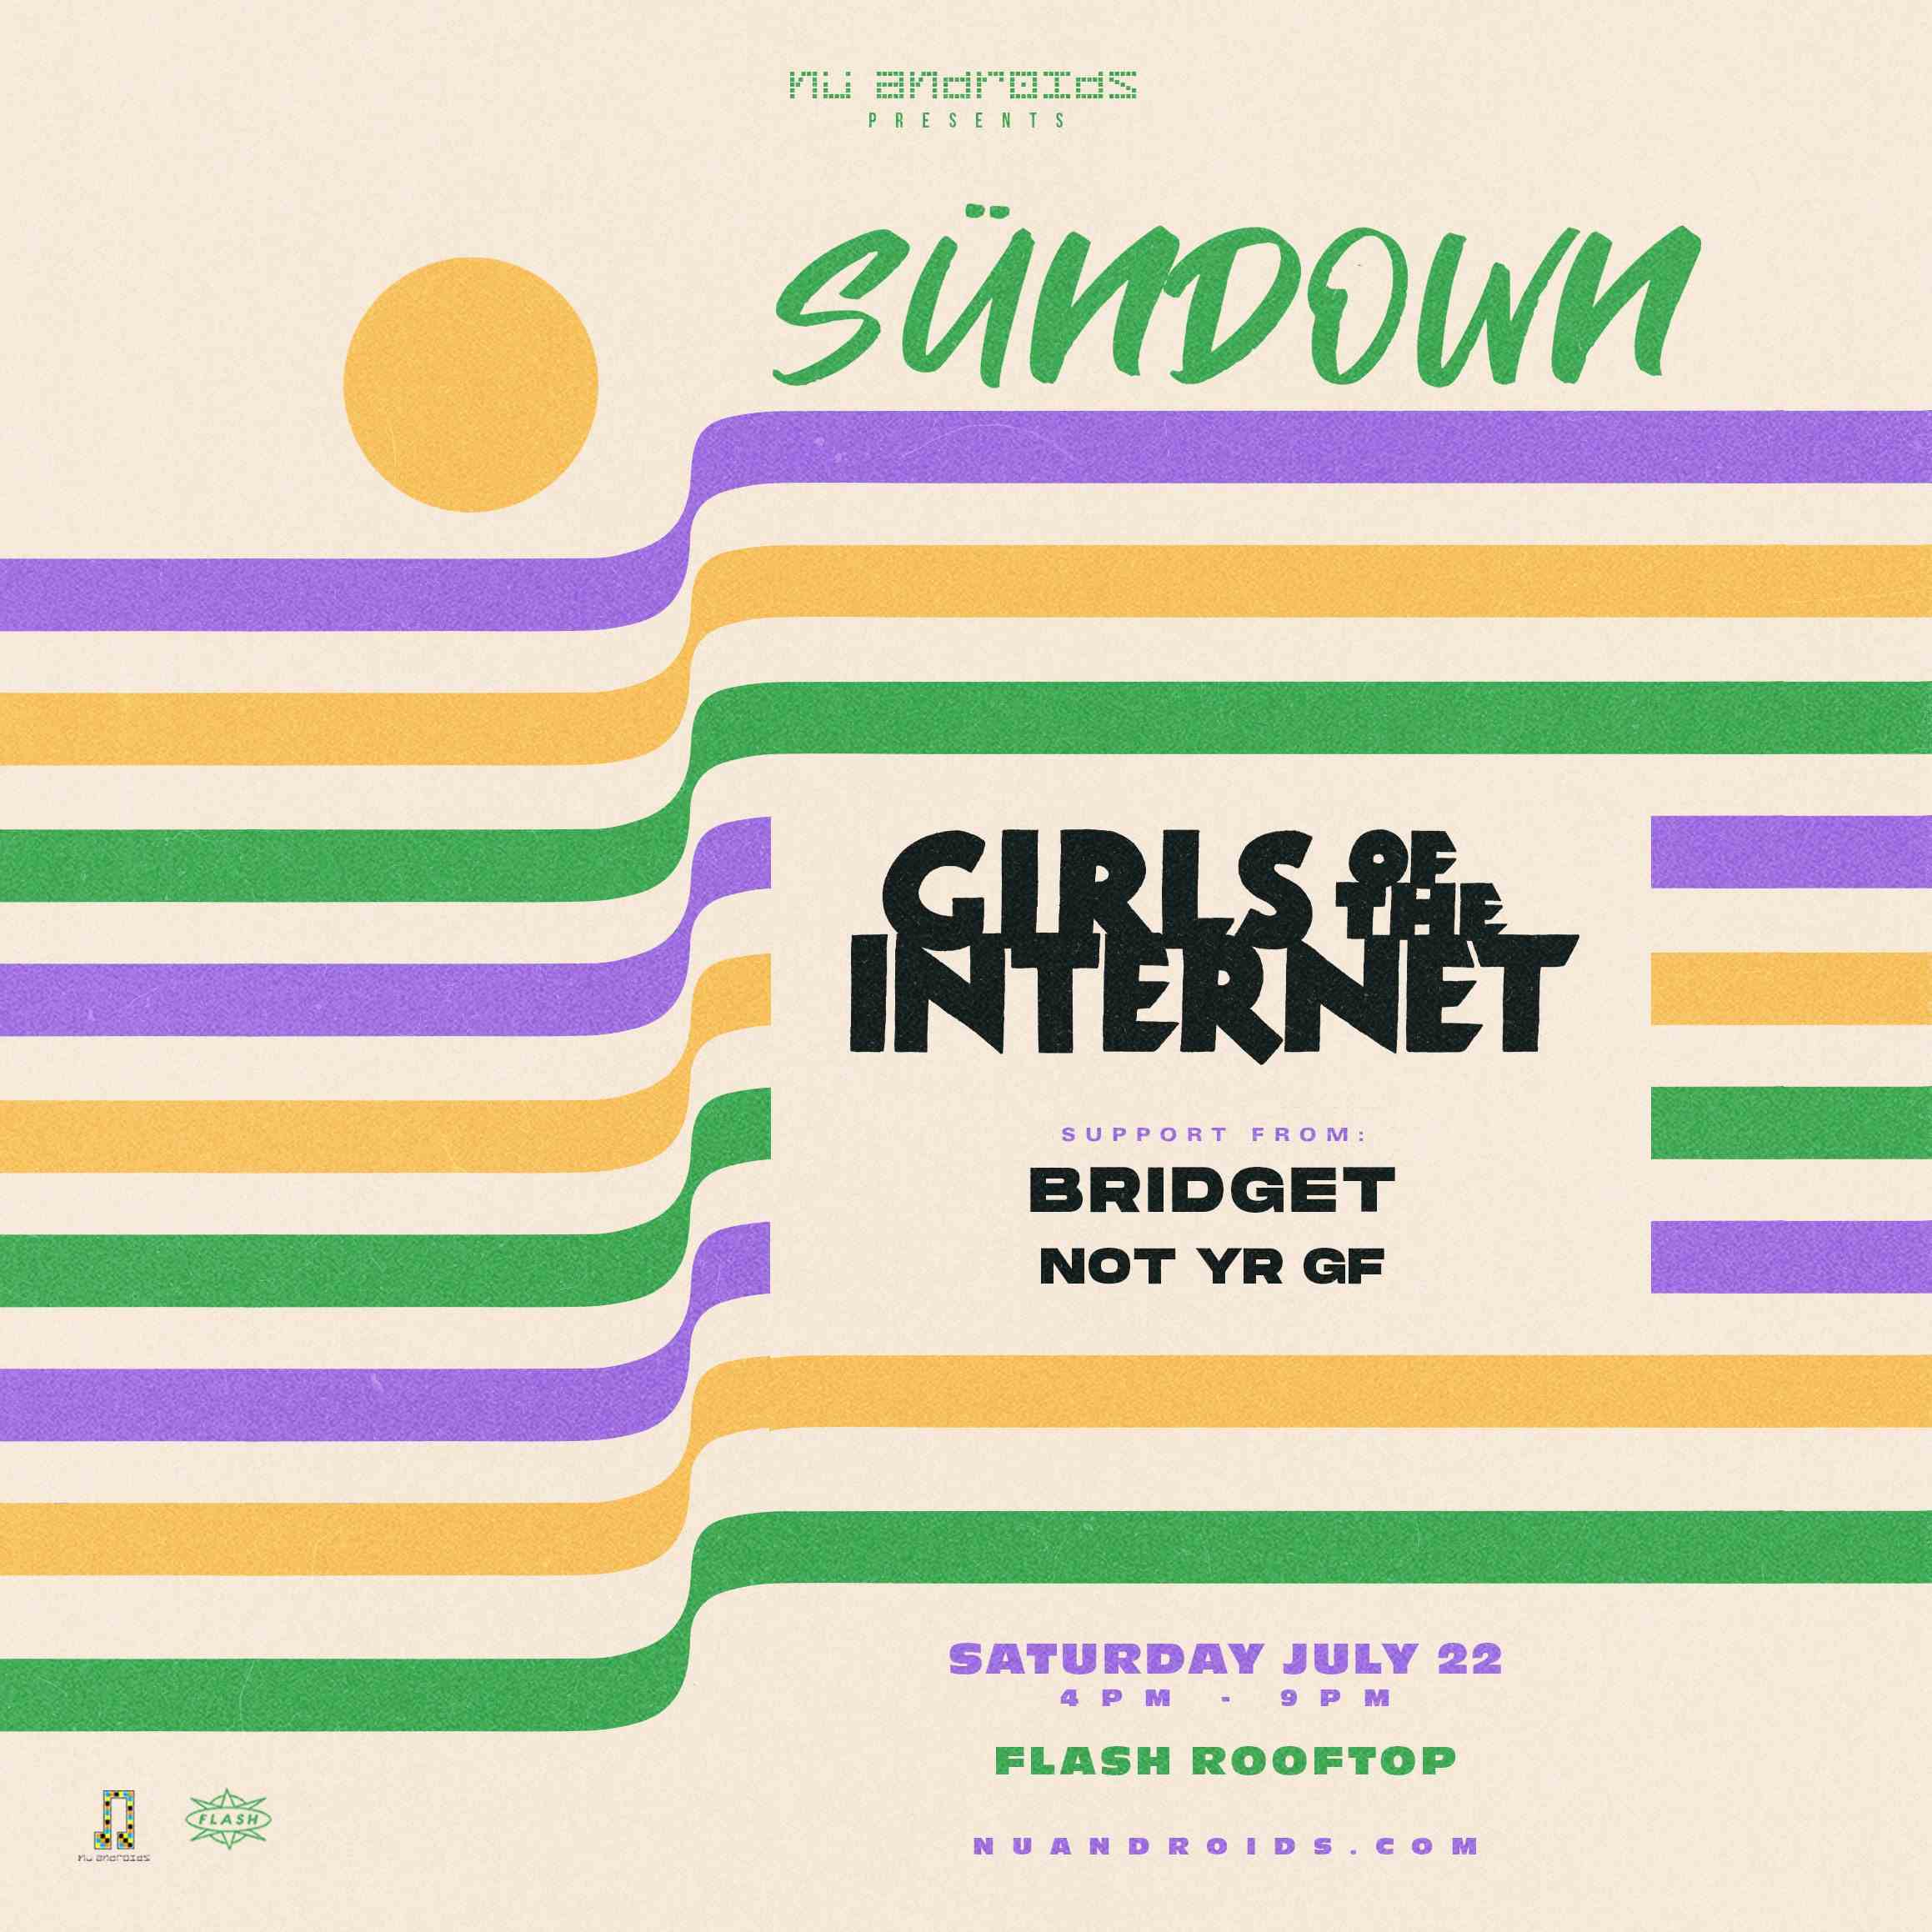 Nü Androids Presents SünDown: Girls of the Internet (21+) event flyer